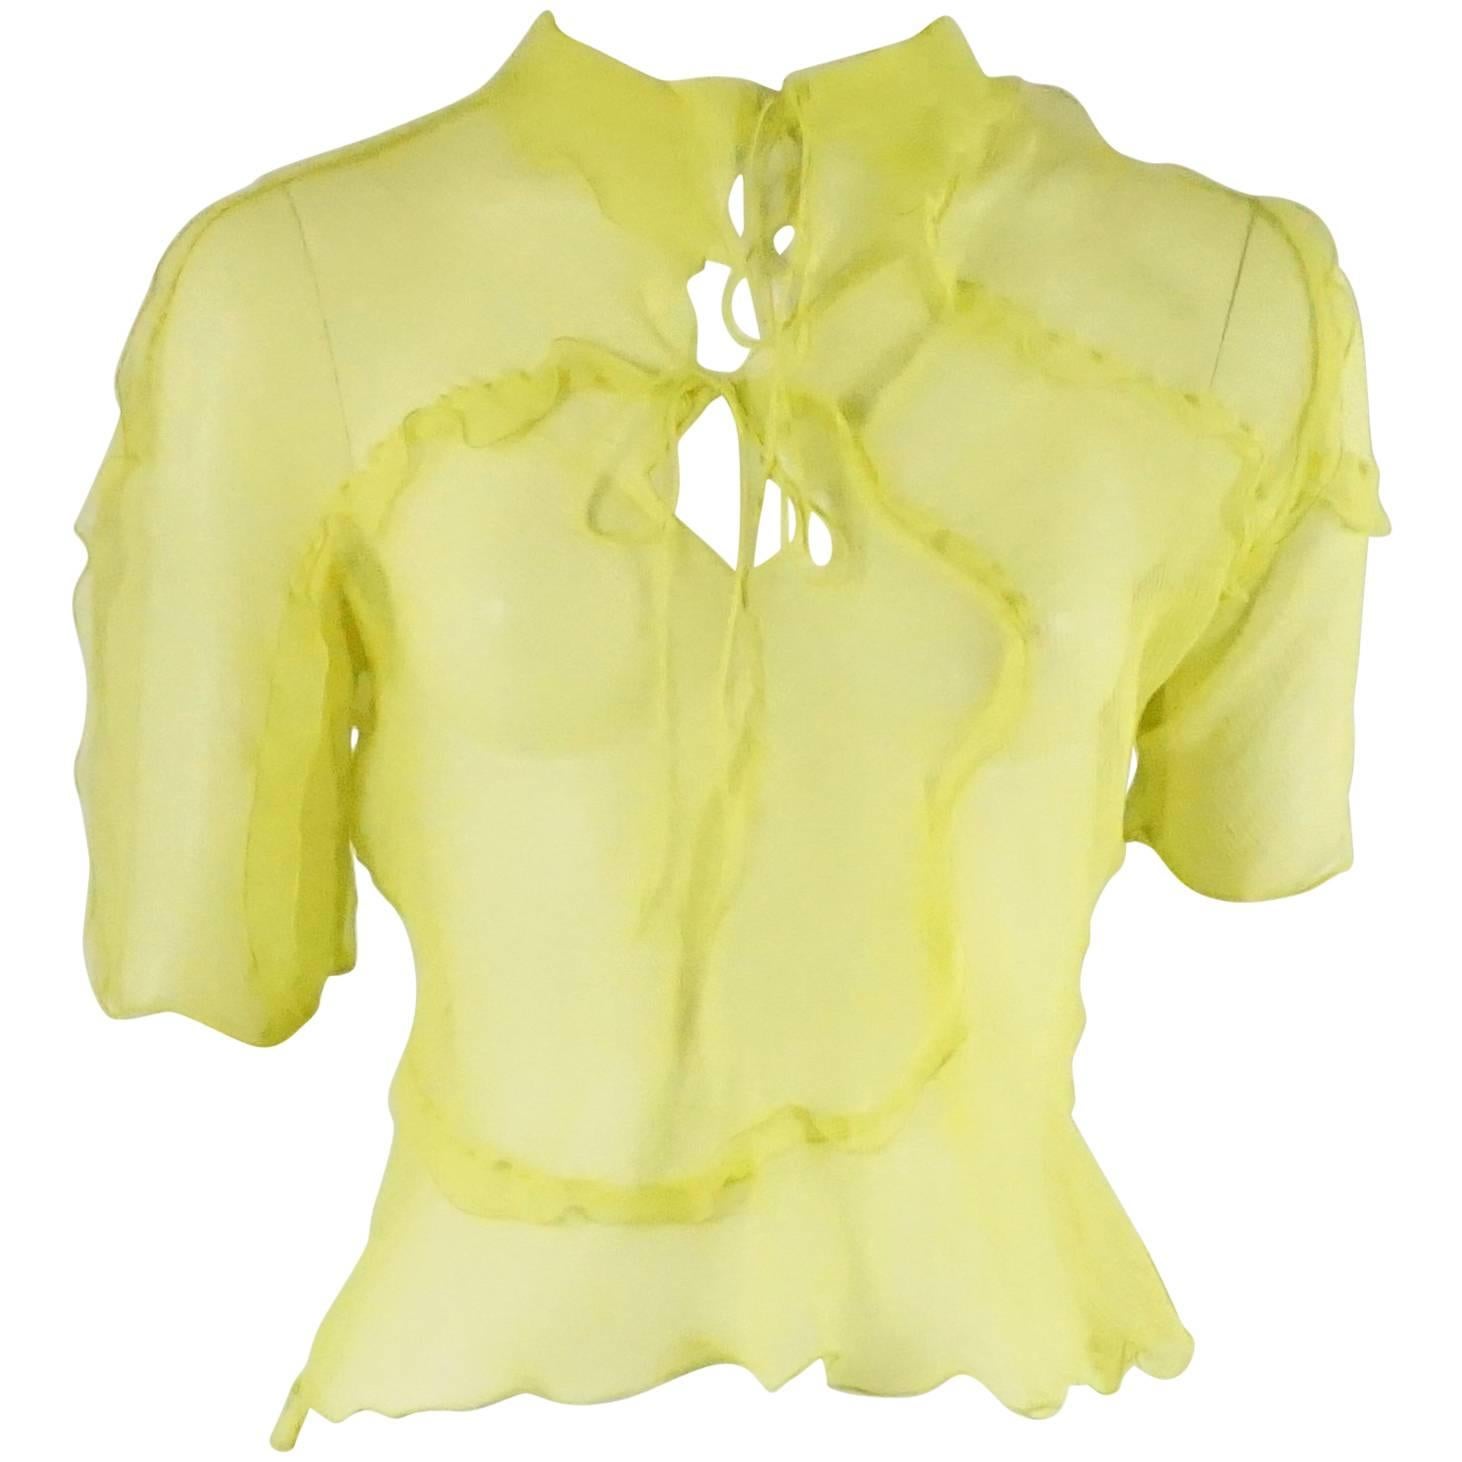 Fendi Yellow Silk Chiffon Short Sleeve Top with Ruffles - S